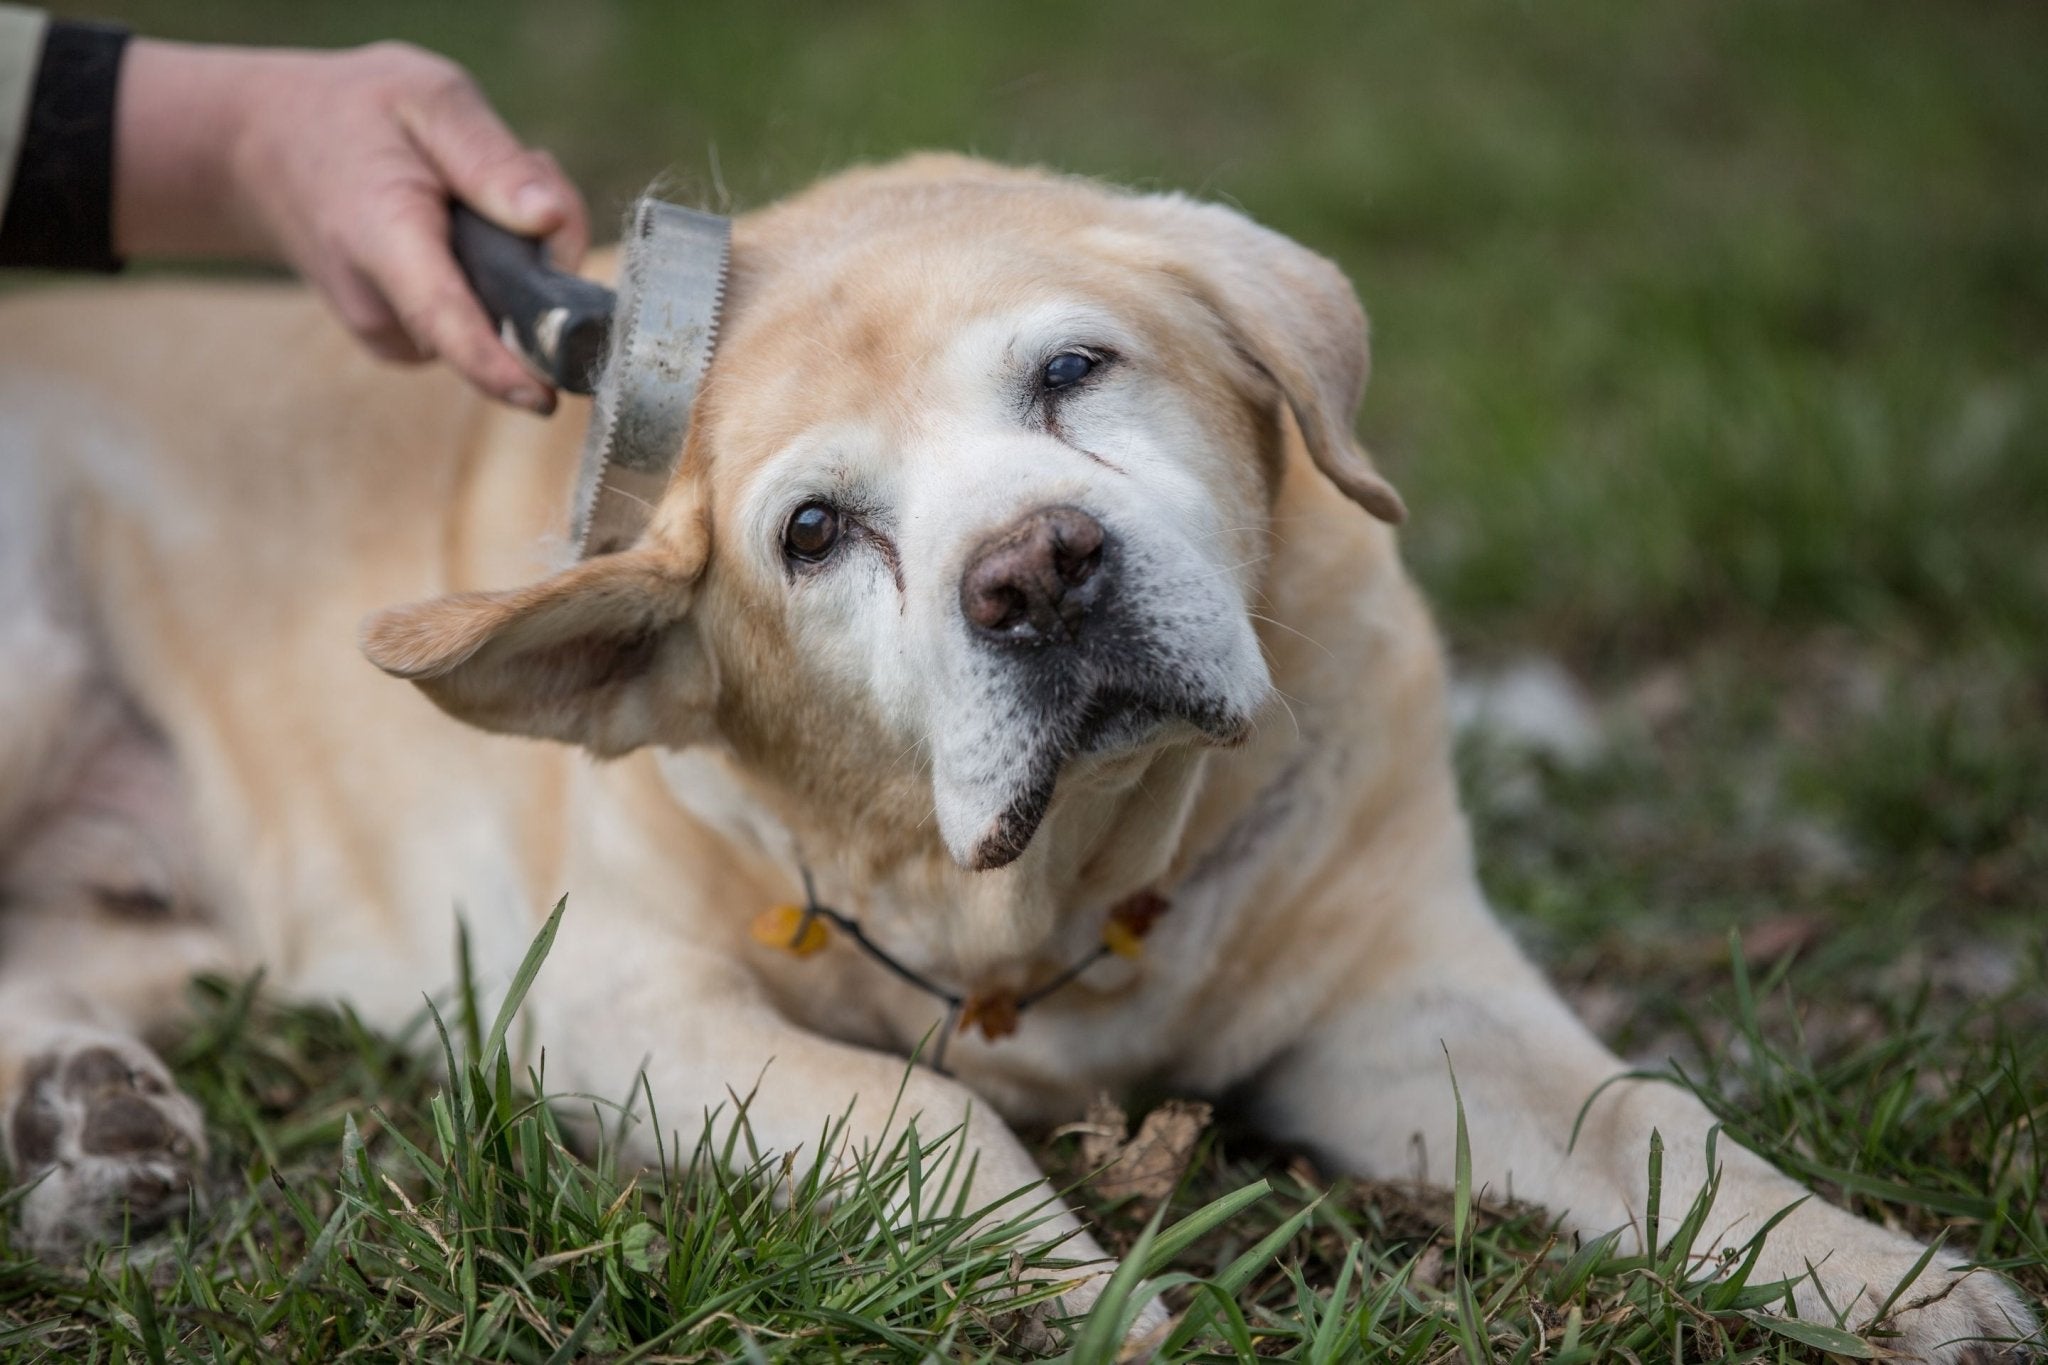 Elderly labrador dog being brushed to remove fur.